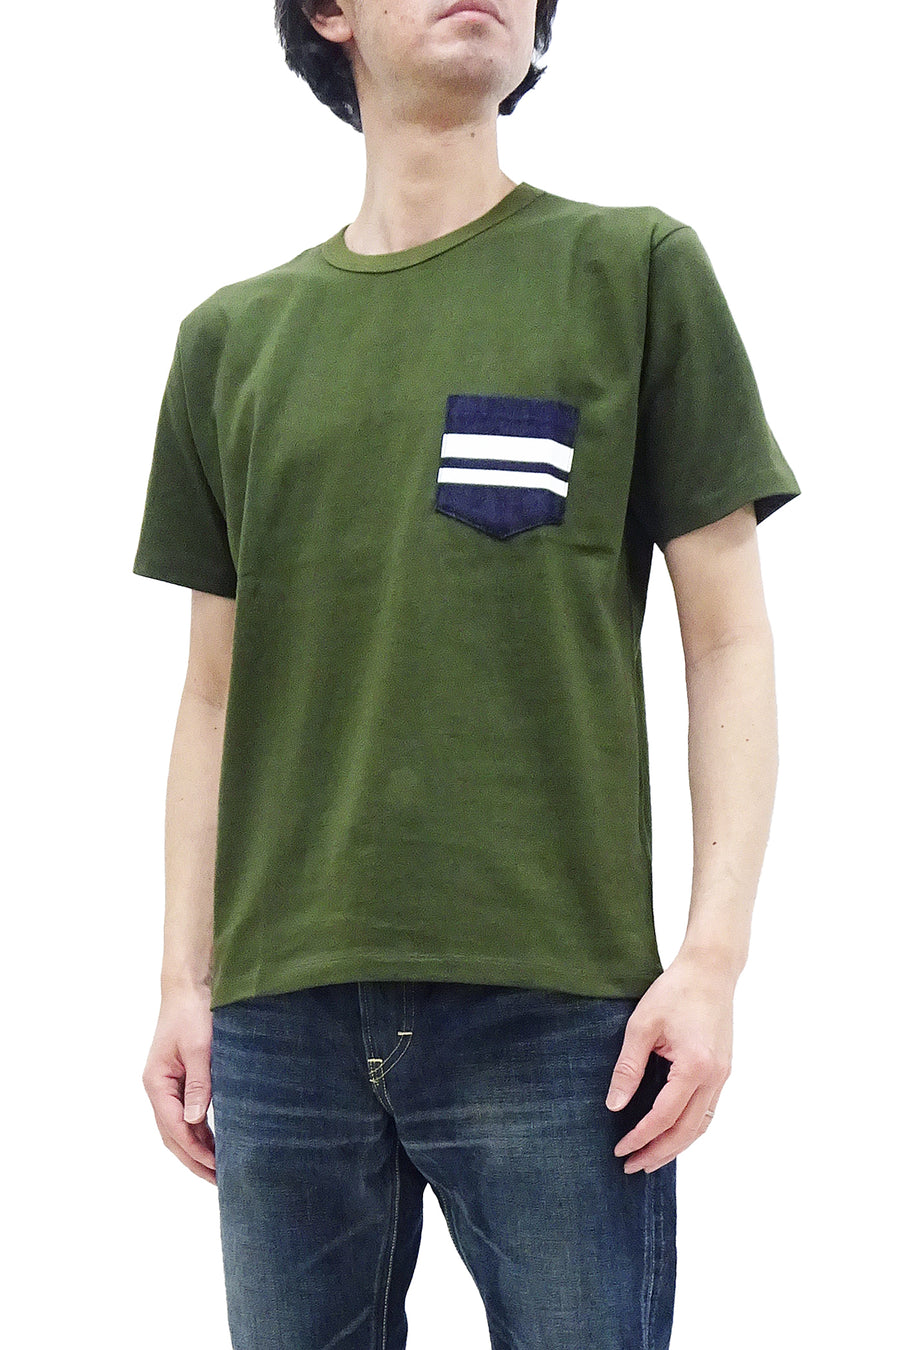 Momotaro Jeans Pocket T-shirt Men\'s St RODEO-JAPAN Clothes with Pine-Avenue Sleeve shop Shirt Short – Tee GTB